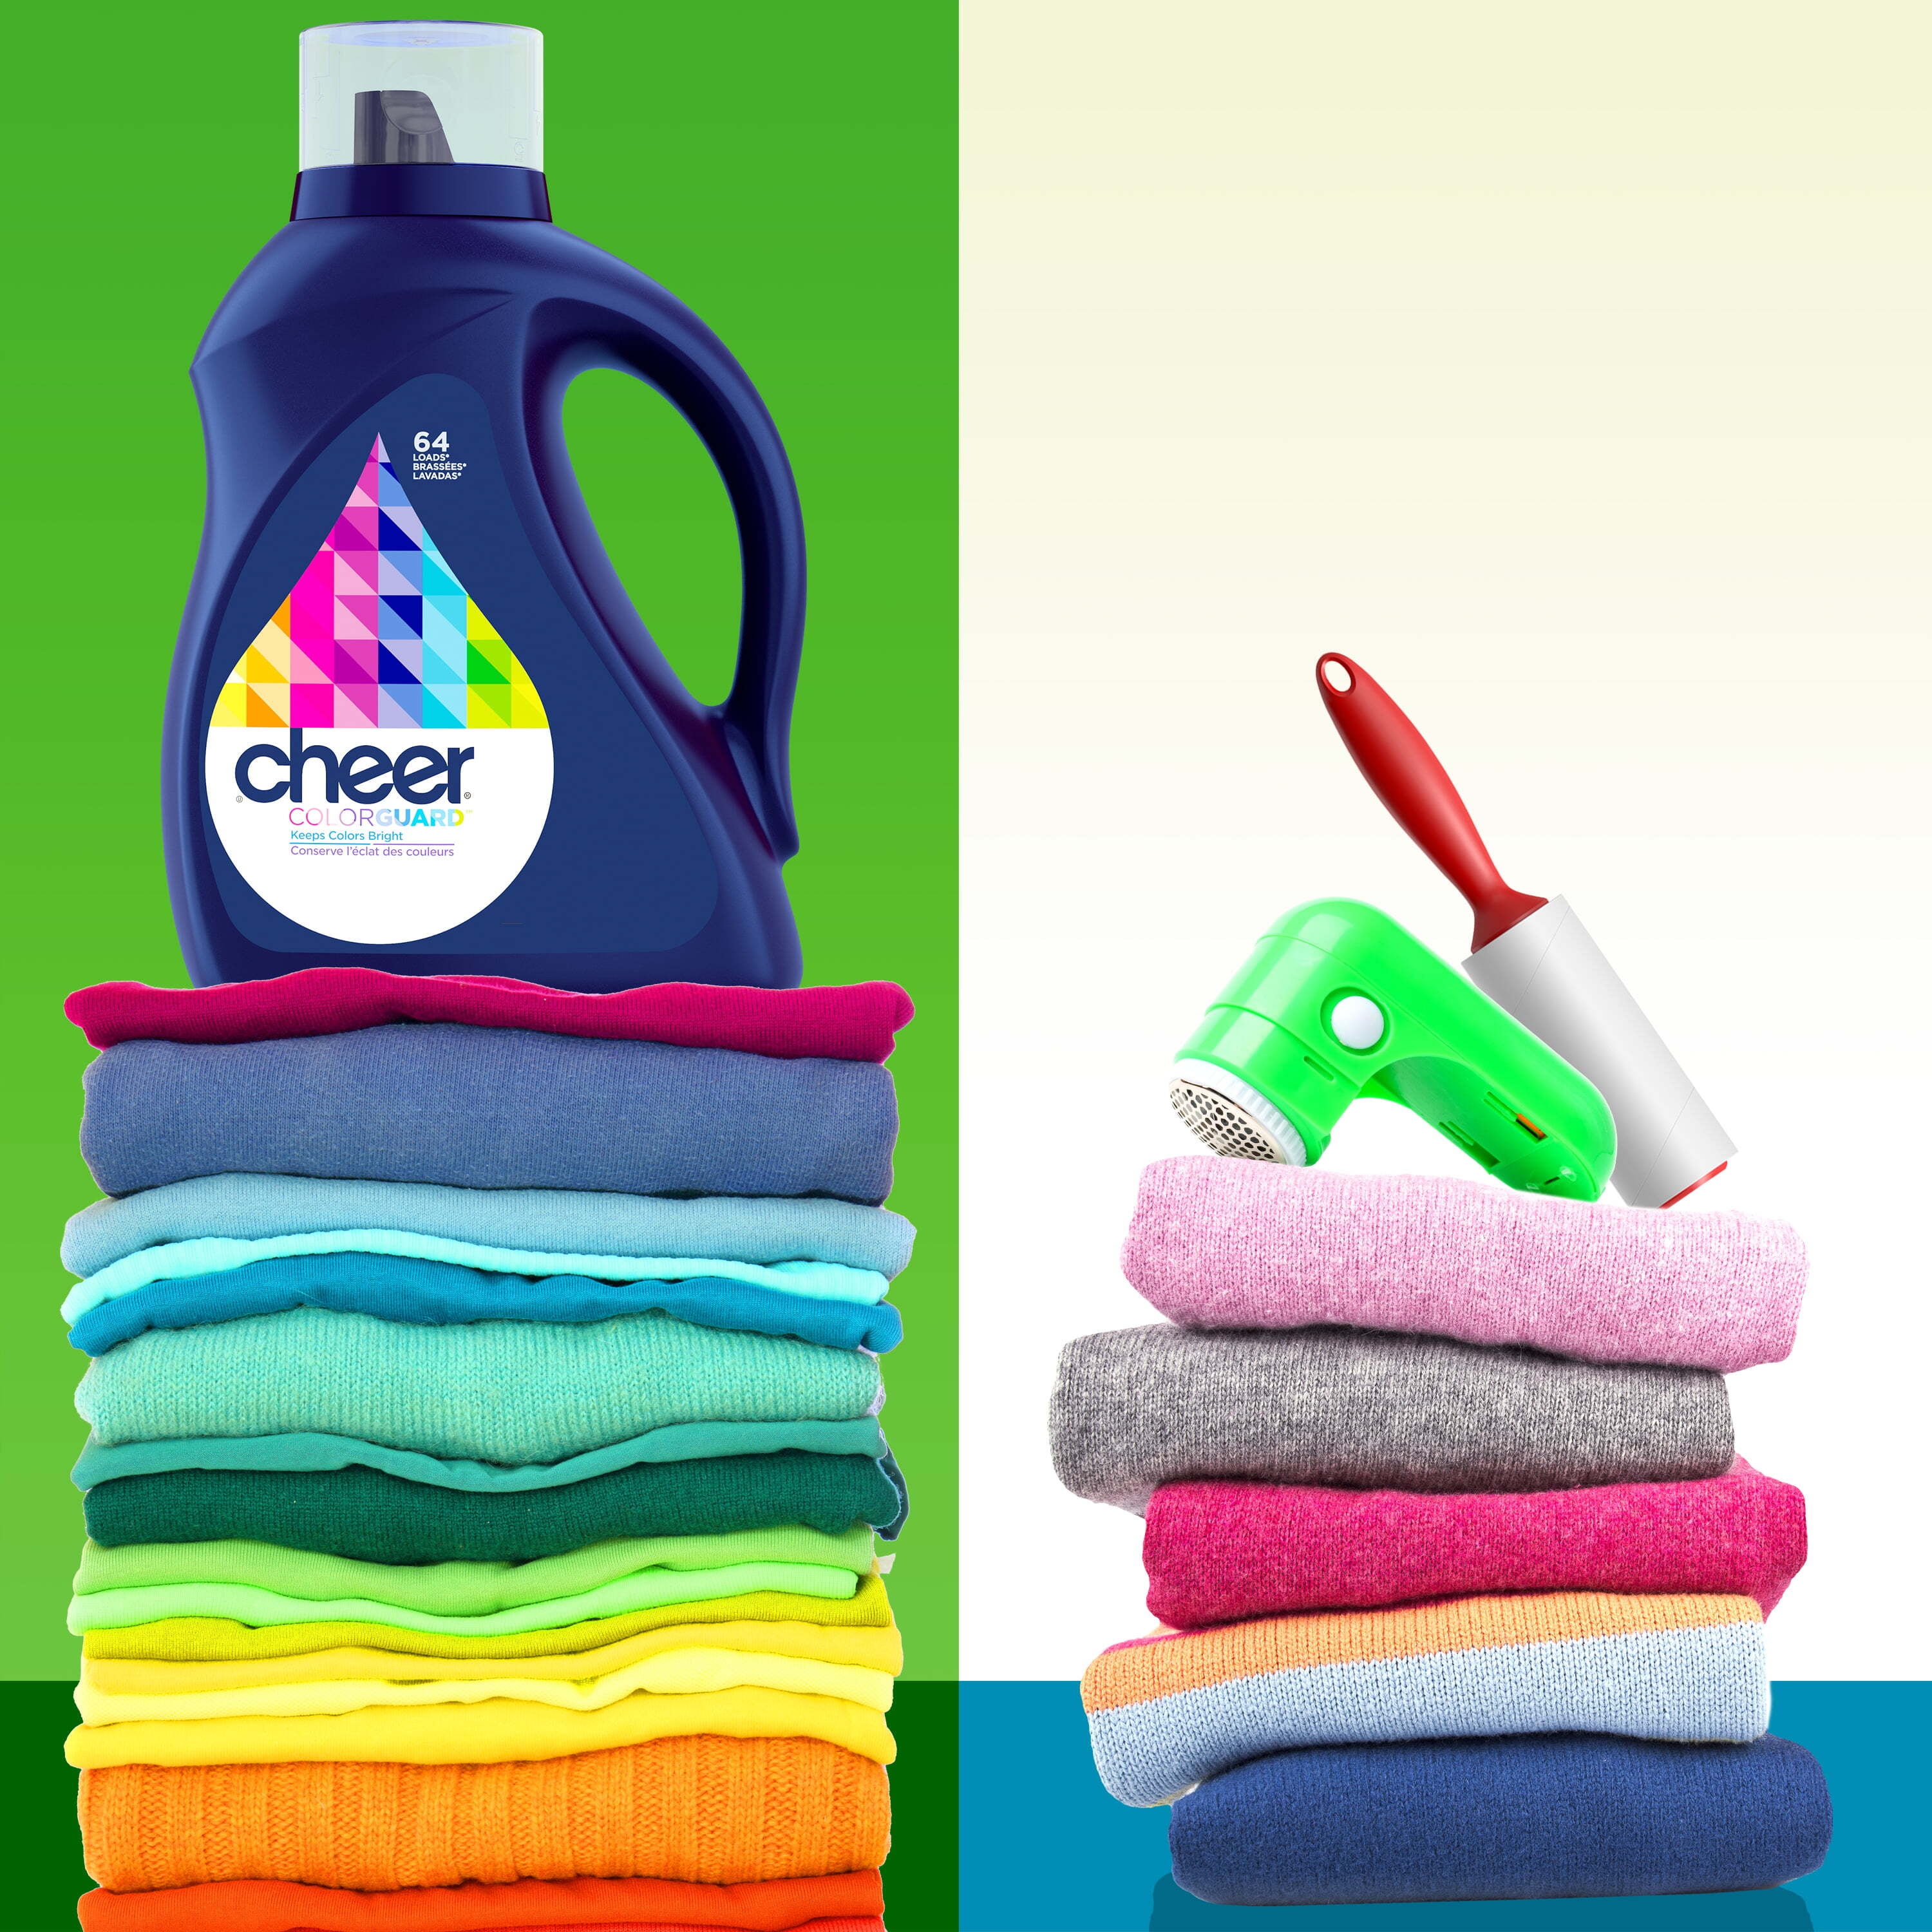 Cheer Liquid Laundry Detergent 107 Loads, 154 fl oz, HE Compatible